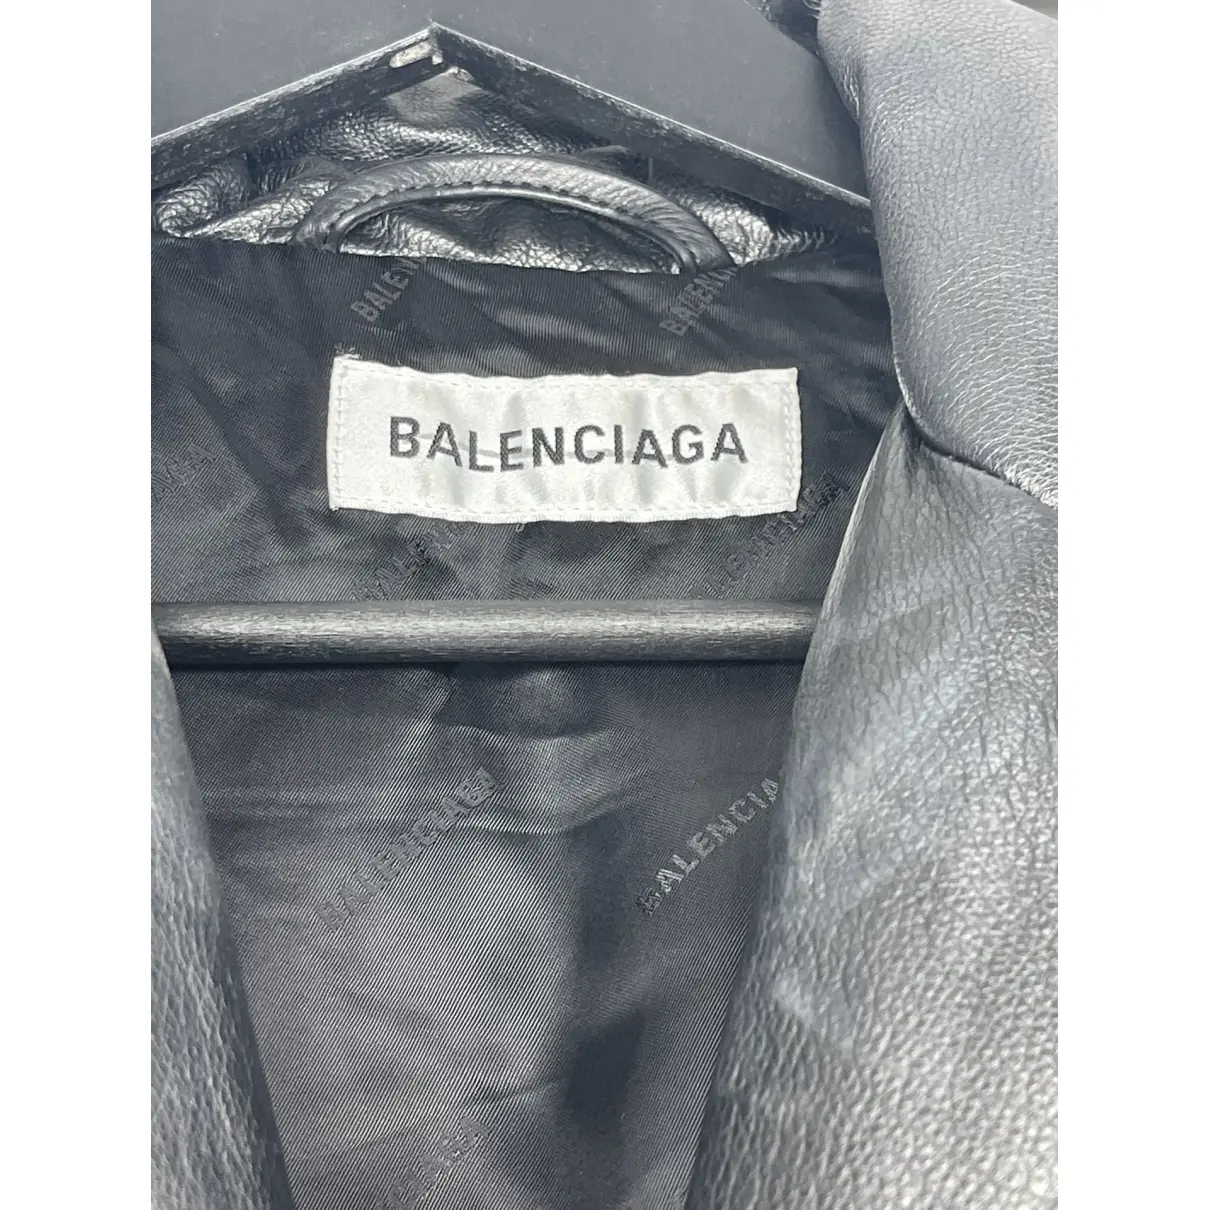 Buy Balenciaga Leather coat online